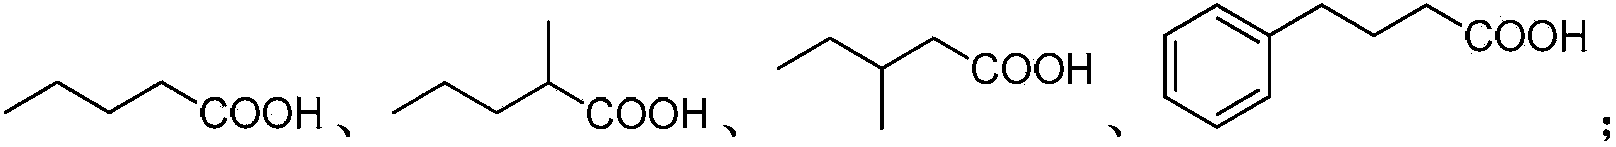 Method for preparing gamma-carbonyl carboxylic acid, amino acid, amino acid ester and amide compounds